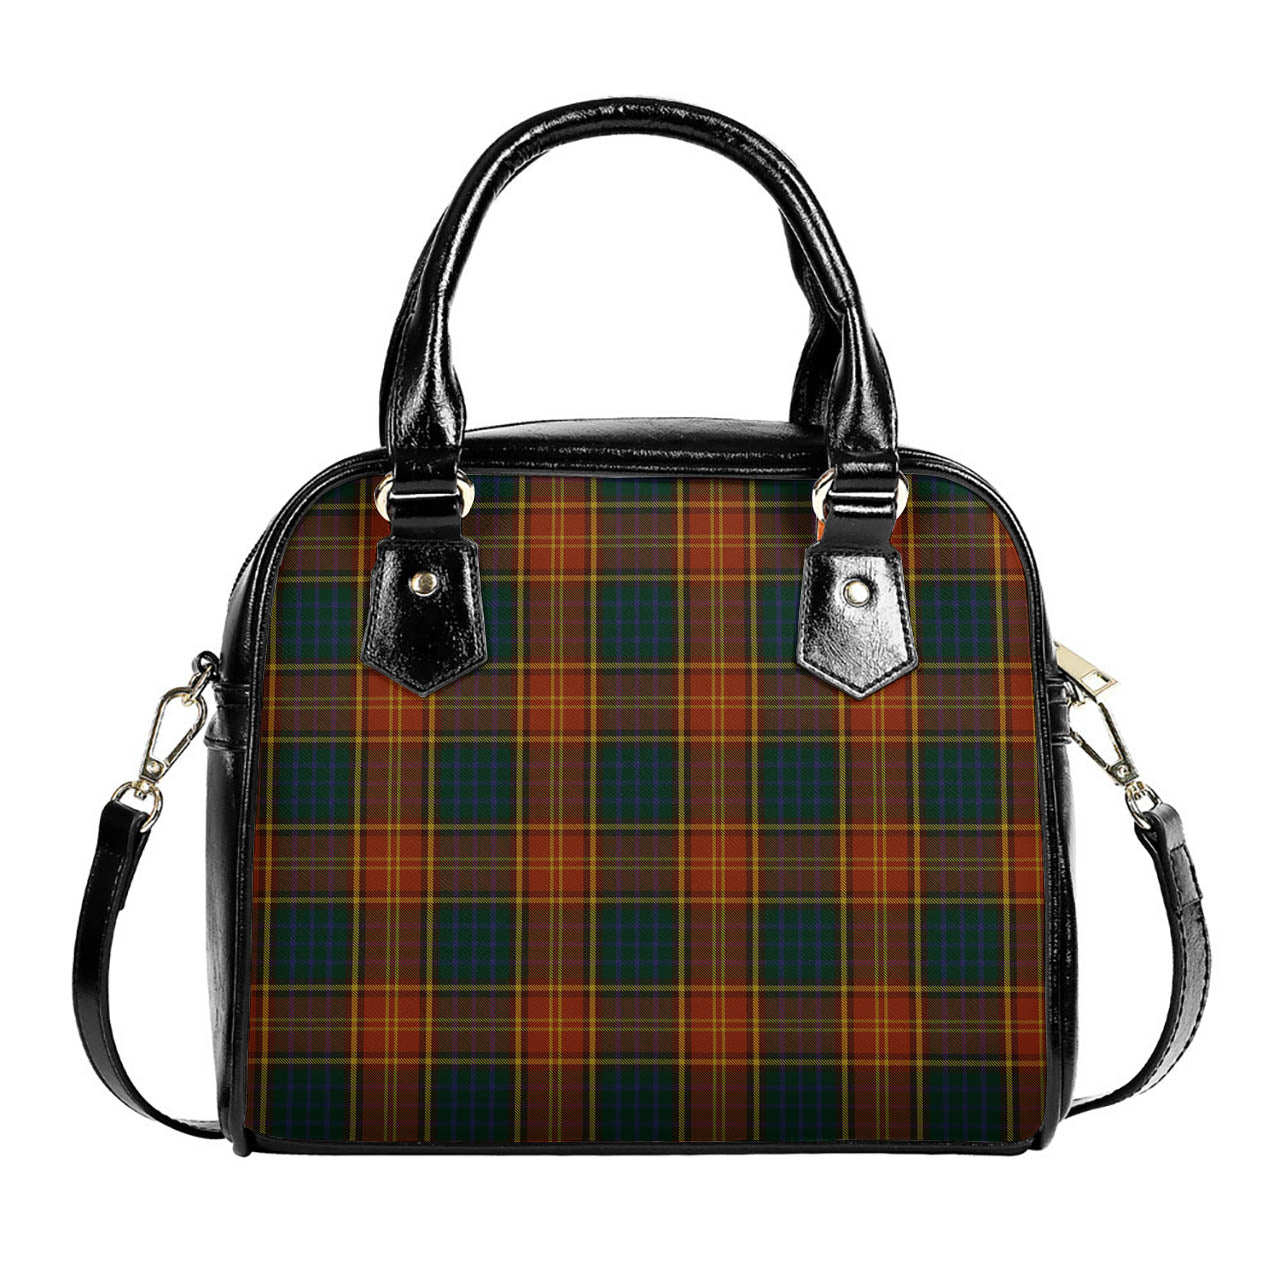 Roscommon County Ireland Tartan Shoulder Handbags One Size 6*25*22 cm - Tartanvibesclothing